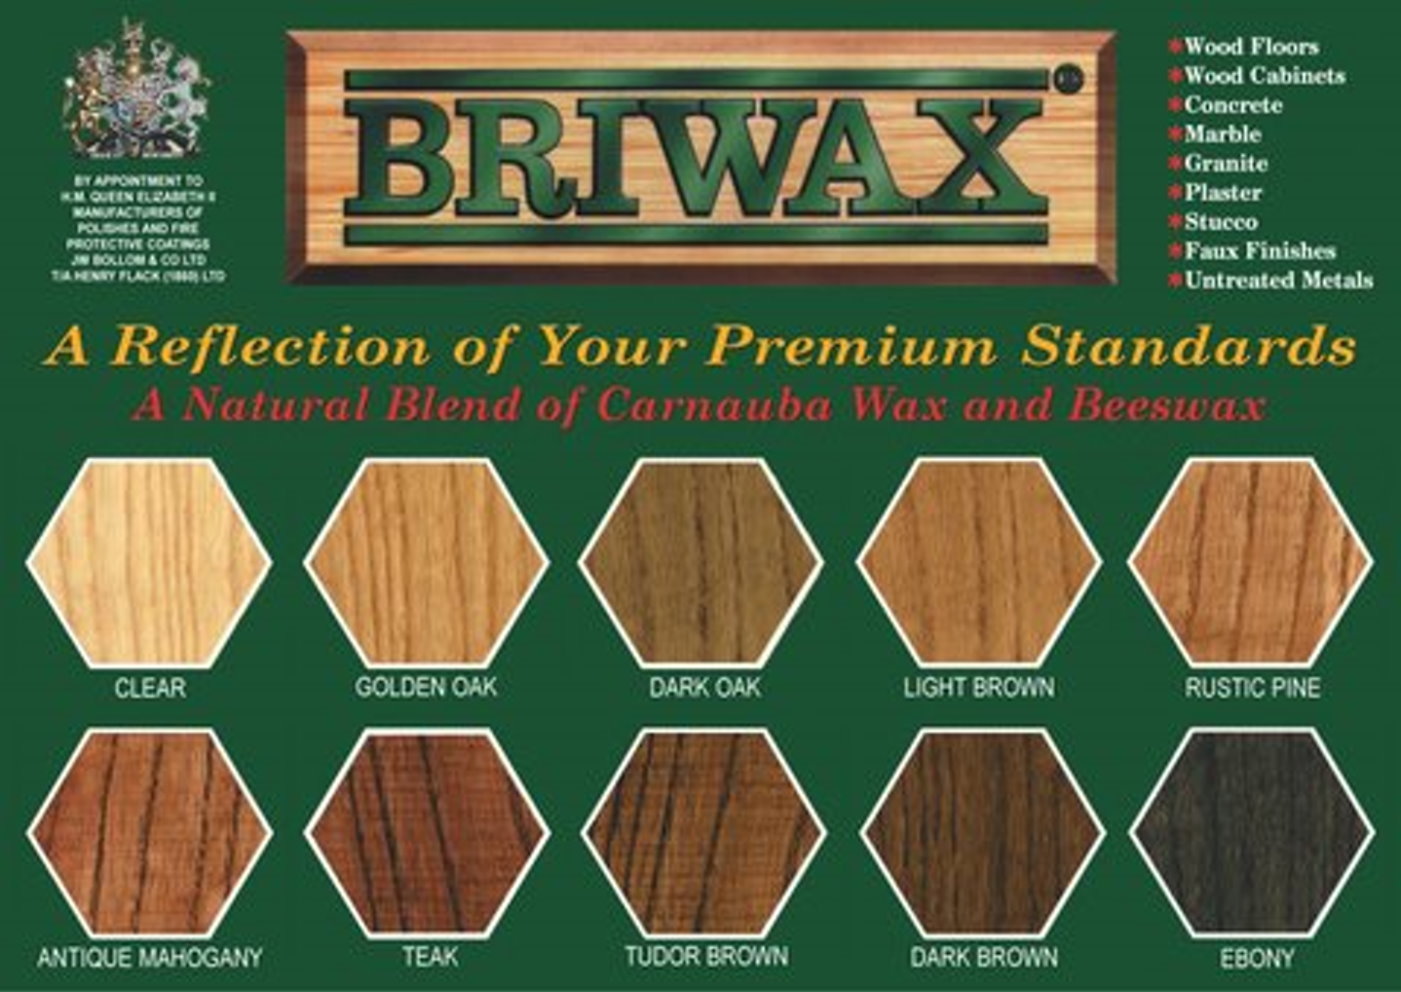 Briwax colors